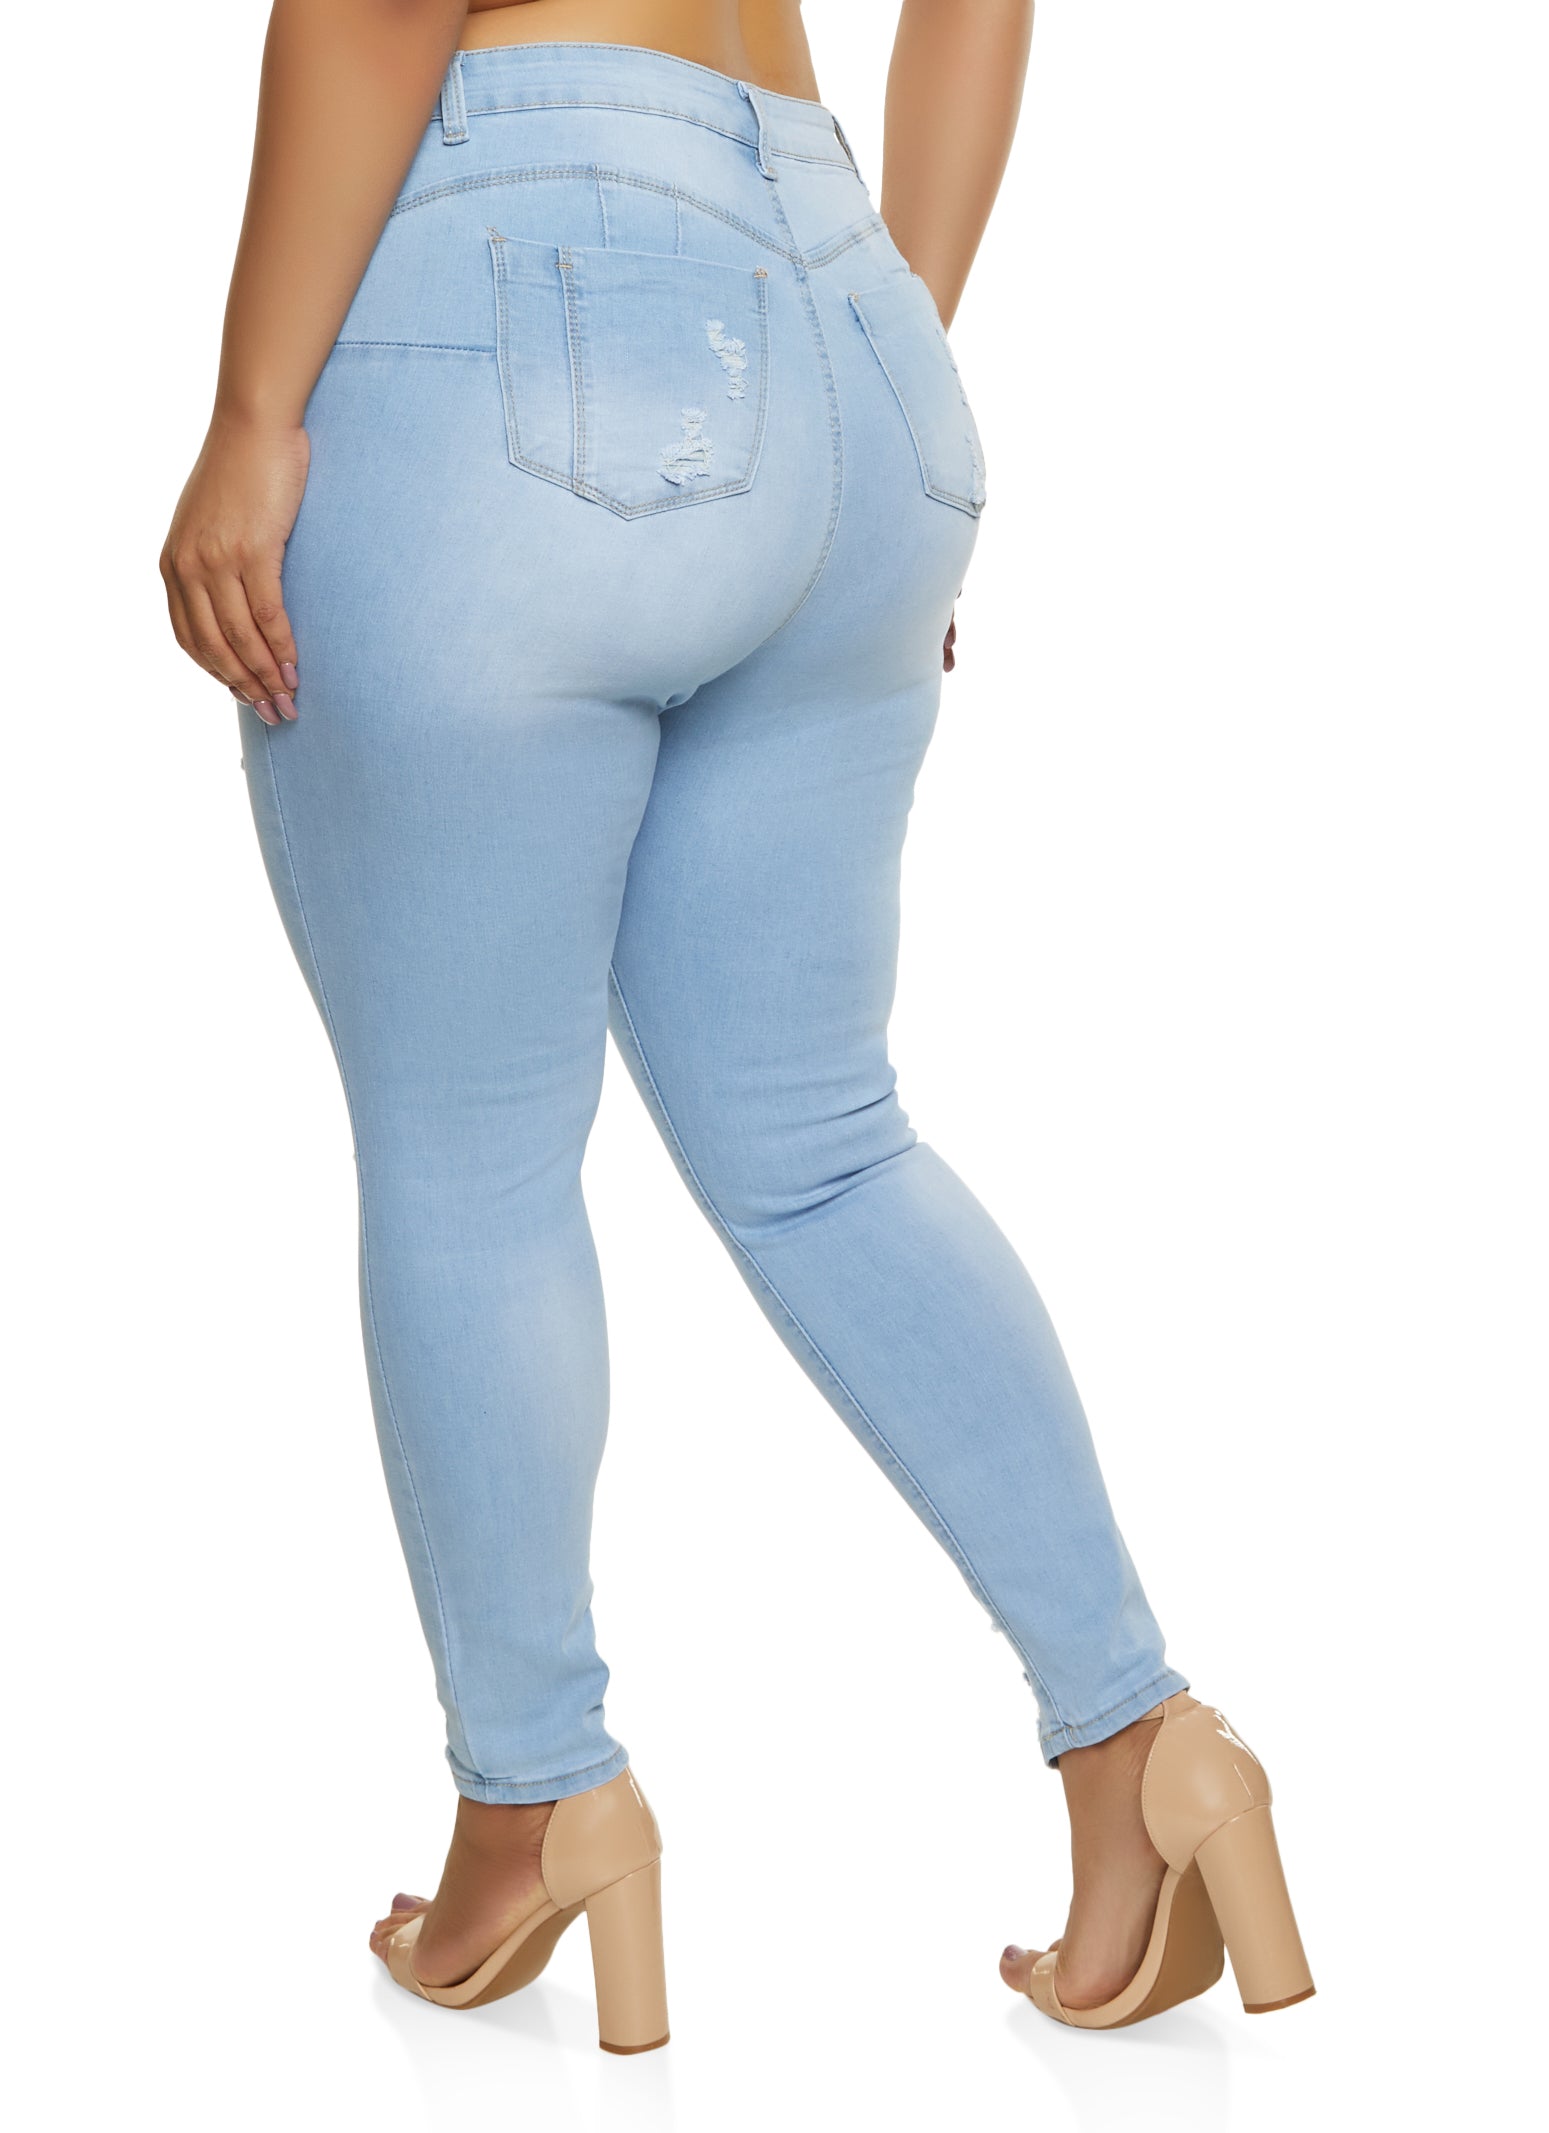 Suko Jeans Women's Light Wash Denim Jeans Size 8 Bling Glitter